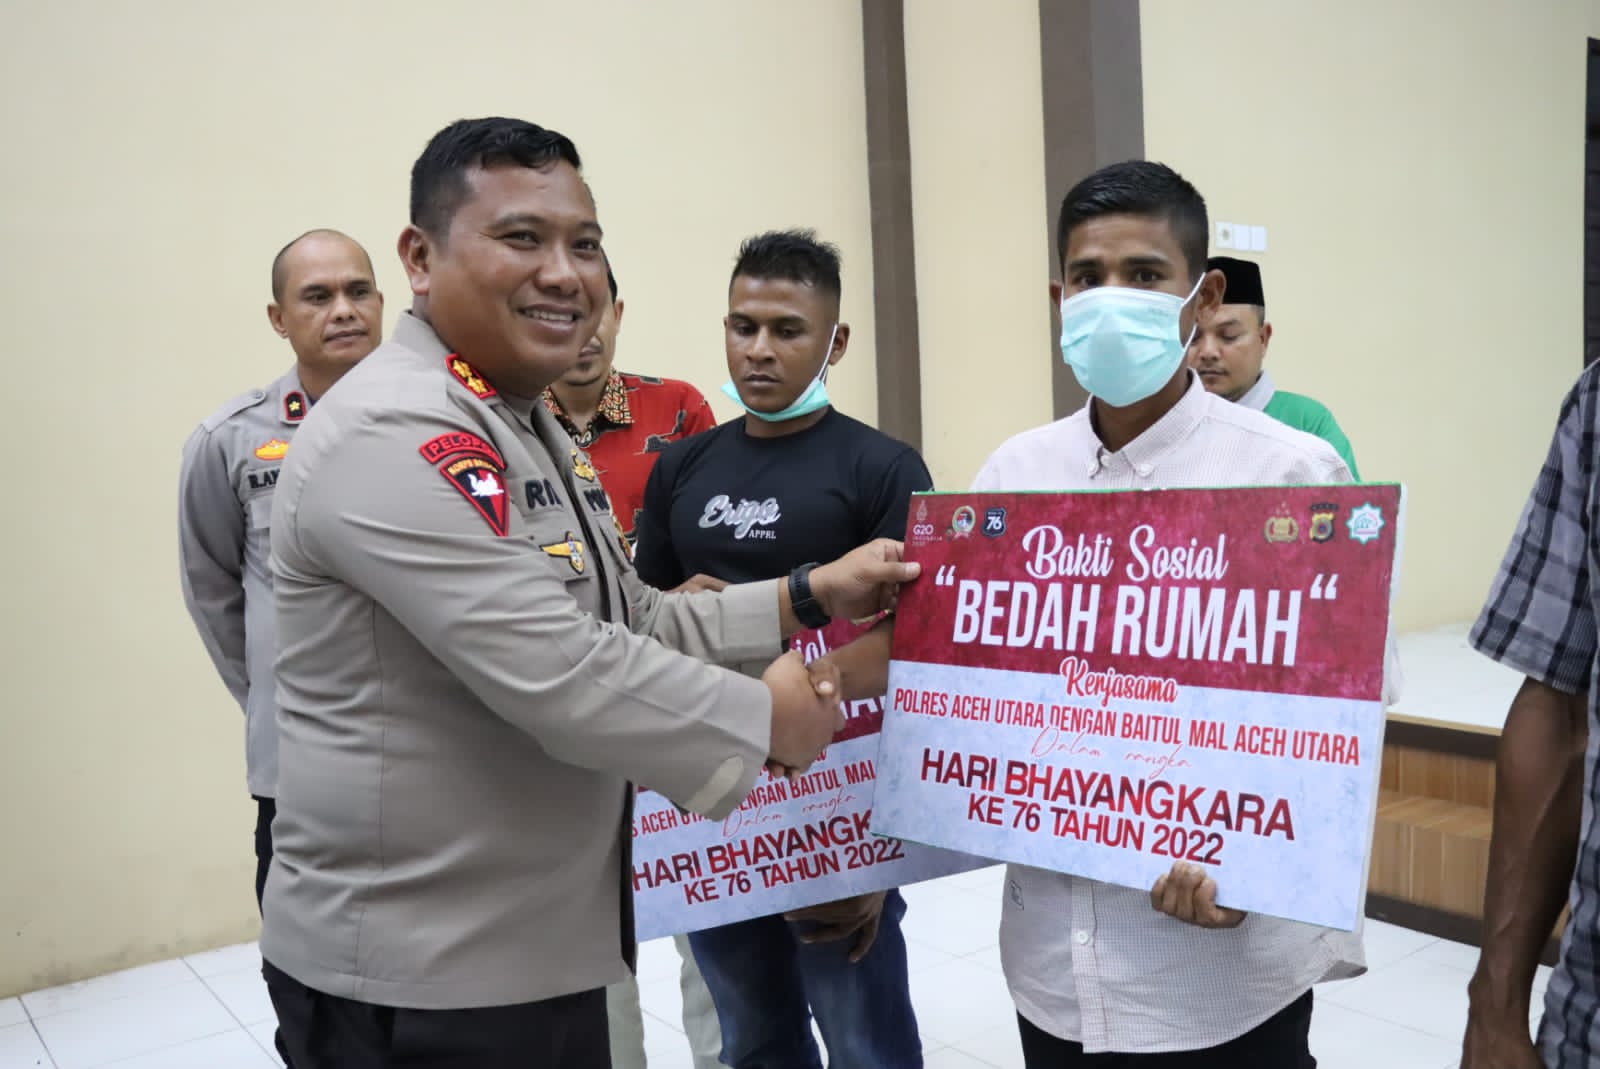 “Bedah Rumah” Bakti Sosial Polres Aceh Utara Bekerja Sama Dengan Baitul Mal Aceh Utara Dalam Rangka Hari Bhayangkara ke -76